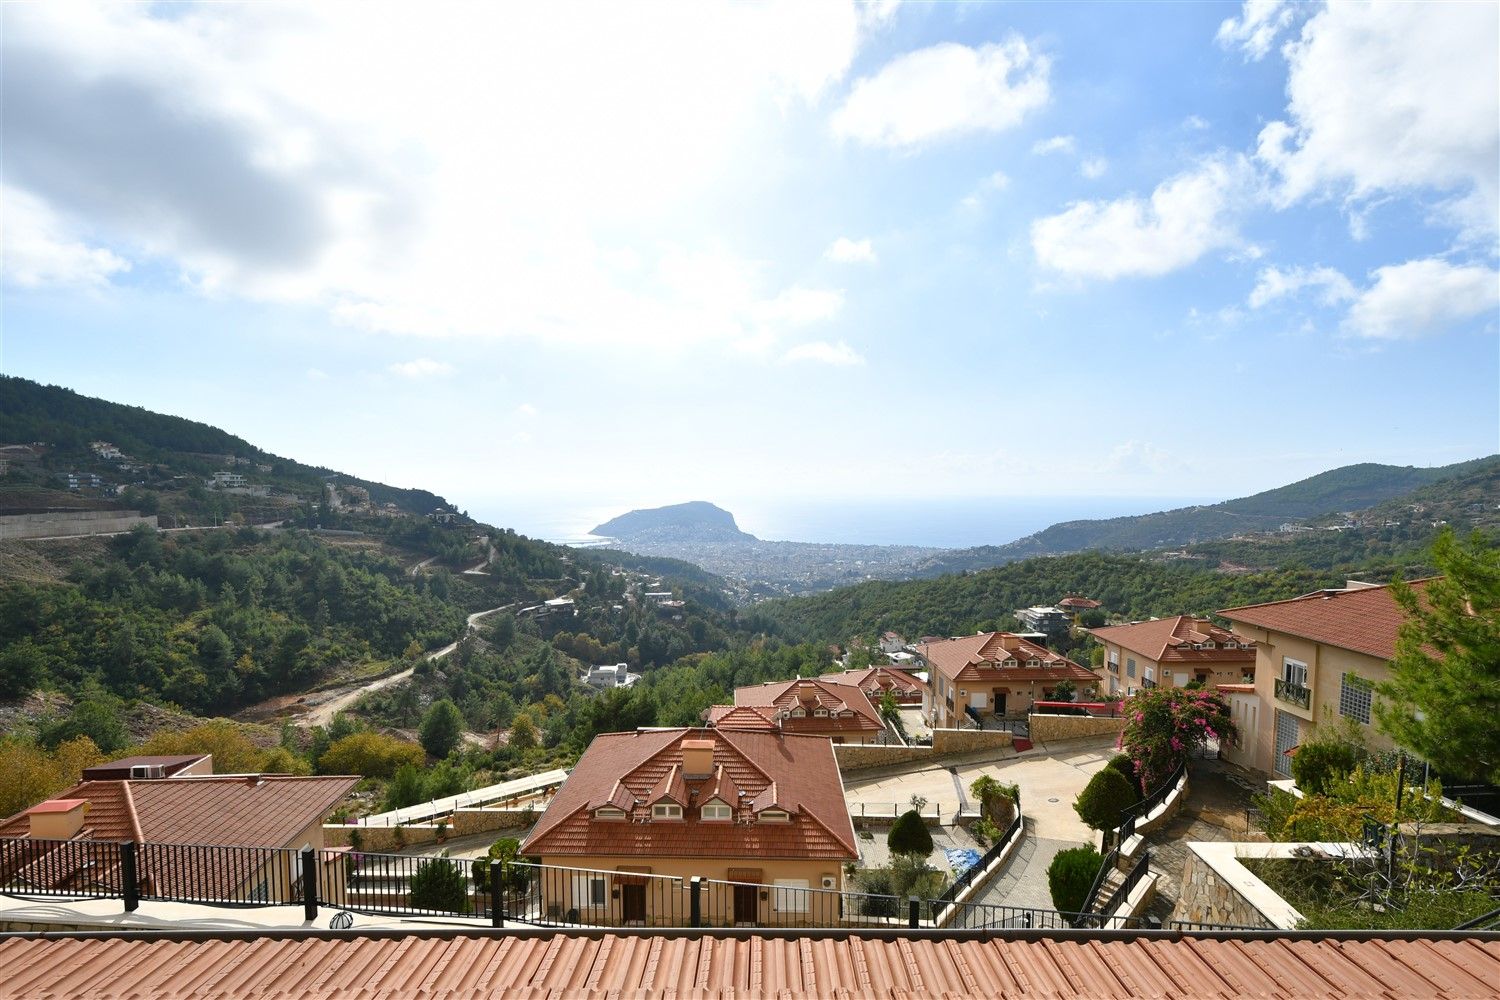 Villa 3+1 overlooking Alanya Castle and sea, Tepe district